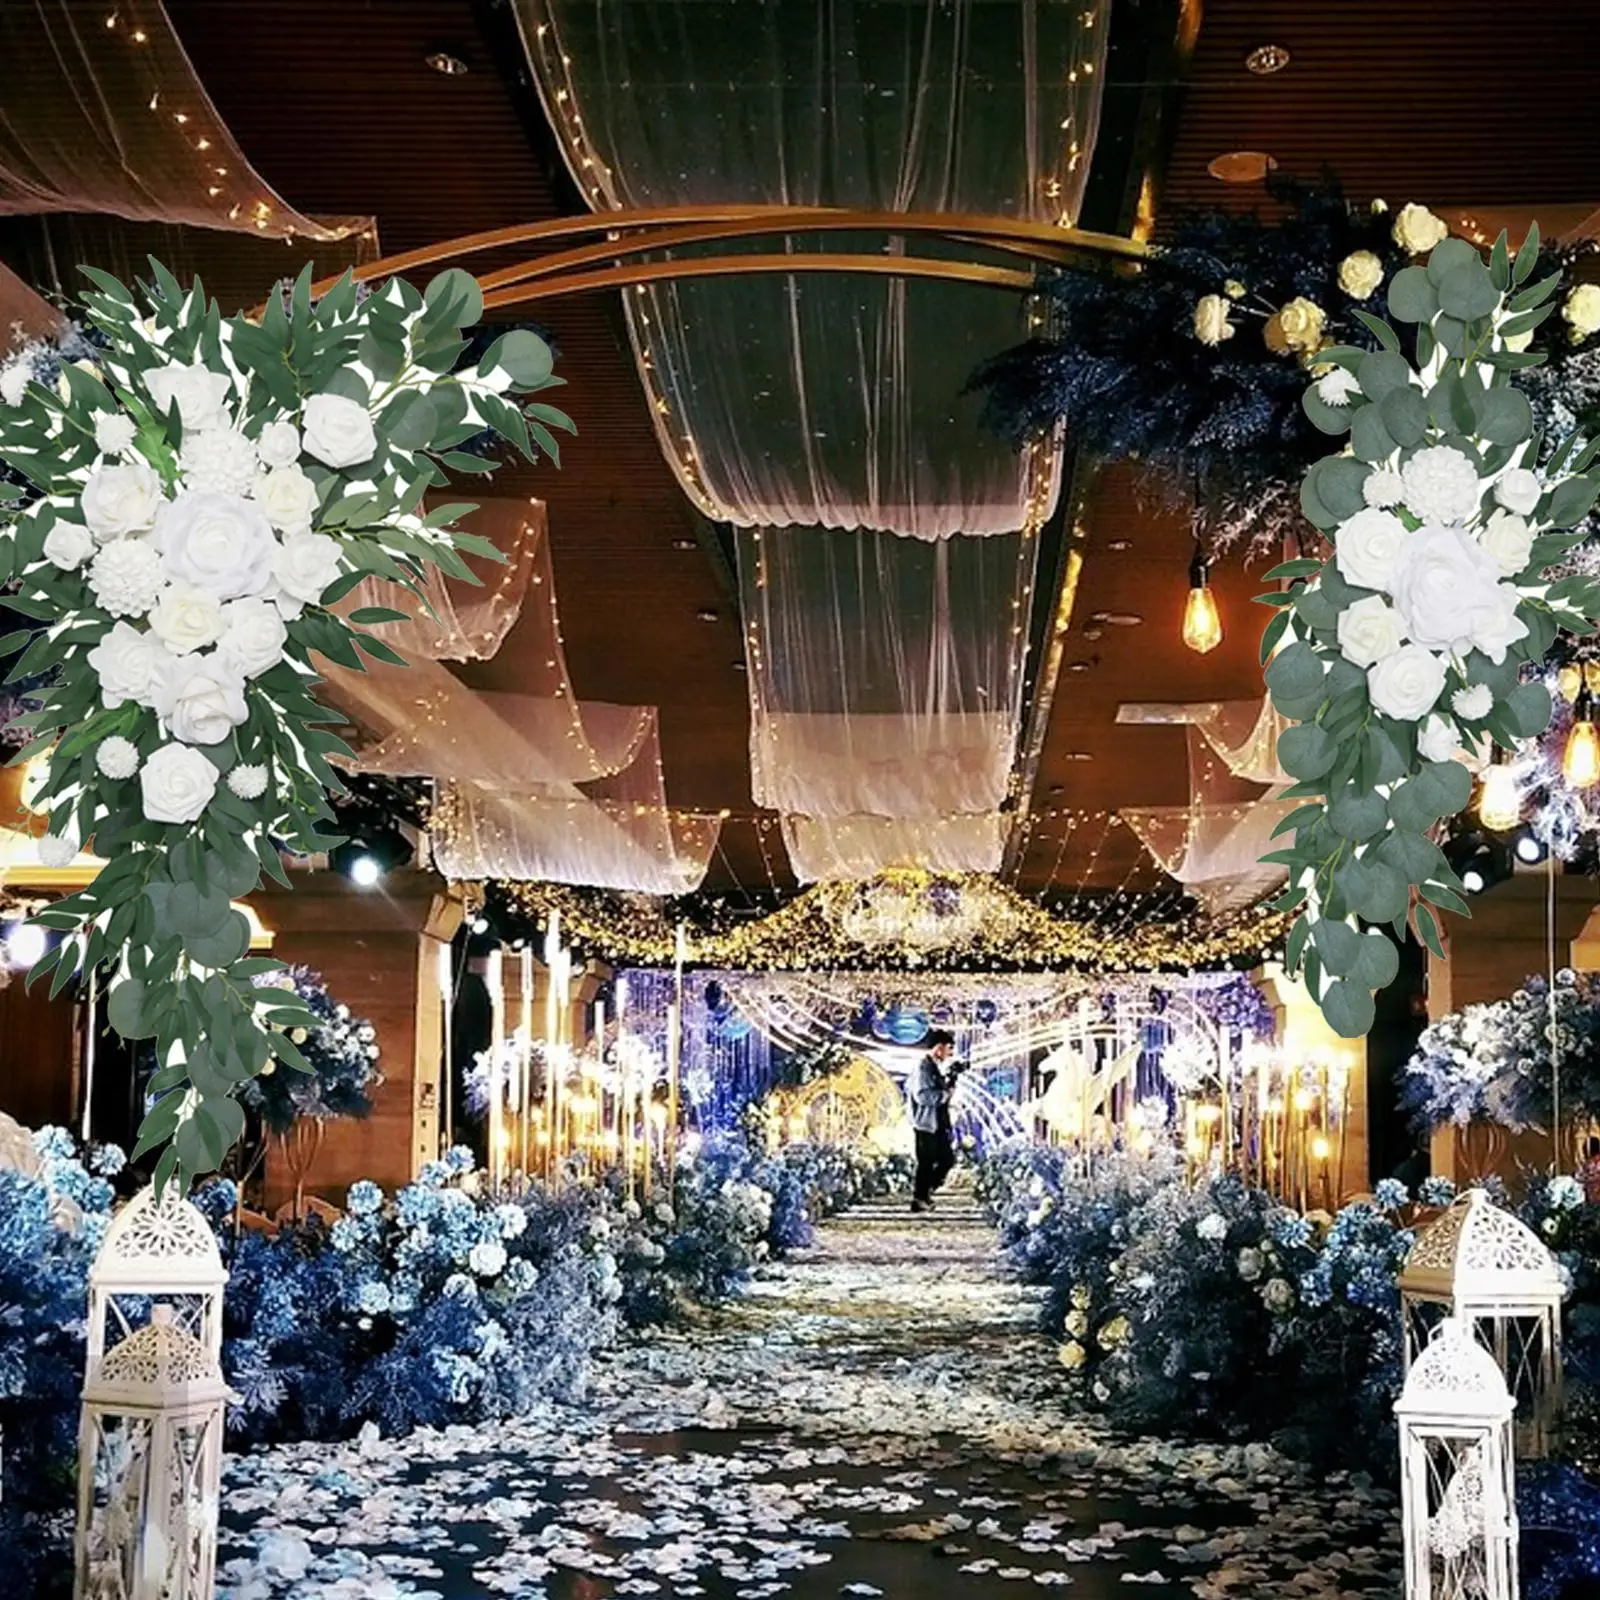 Farmhouse Artificial Swag, Backdrop Centerpiece Garland, Wedding Arch Wreath for Wedding Arch Reception Door Party Decoration